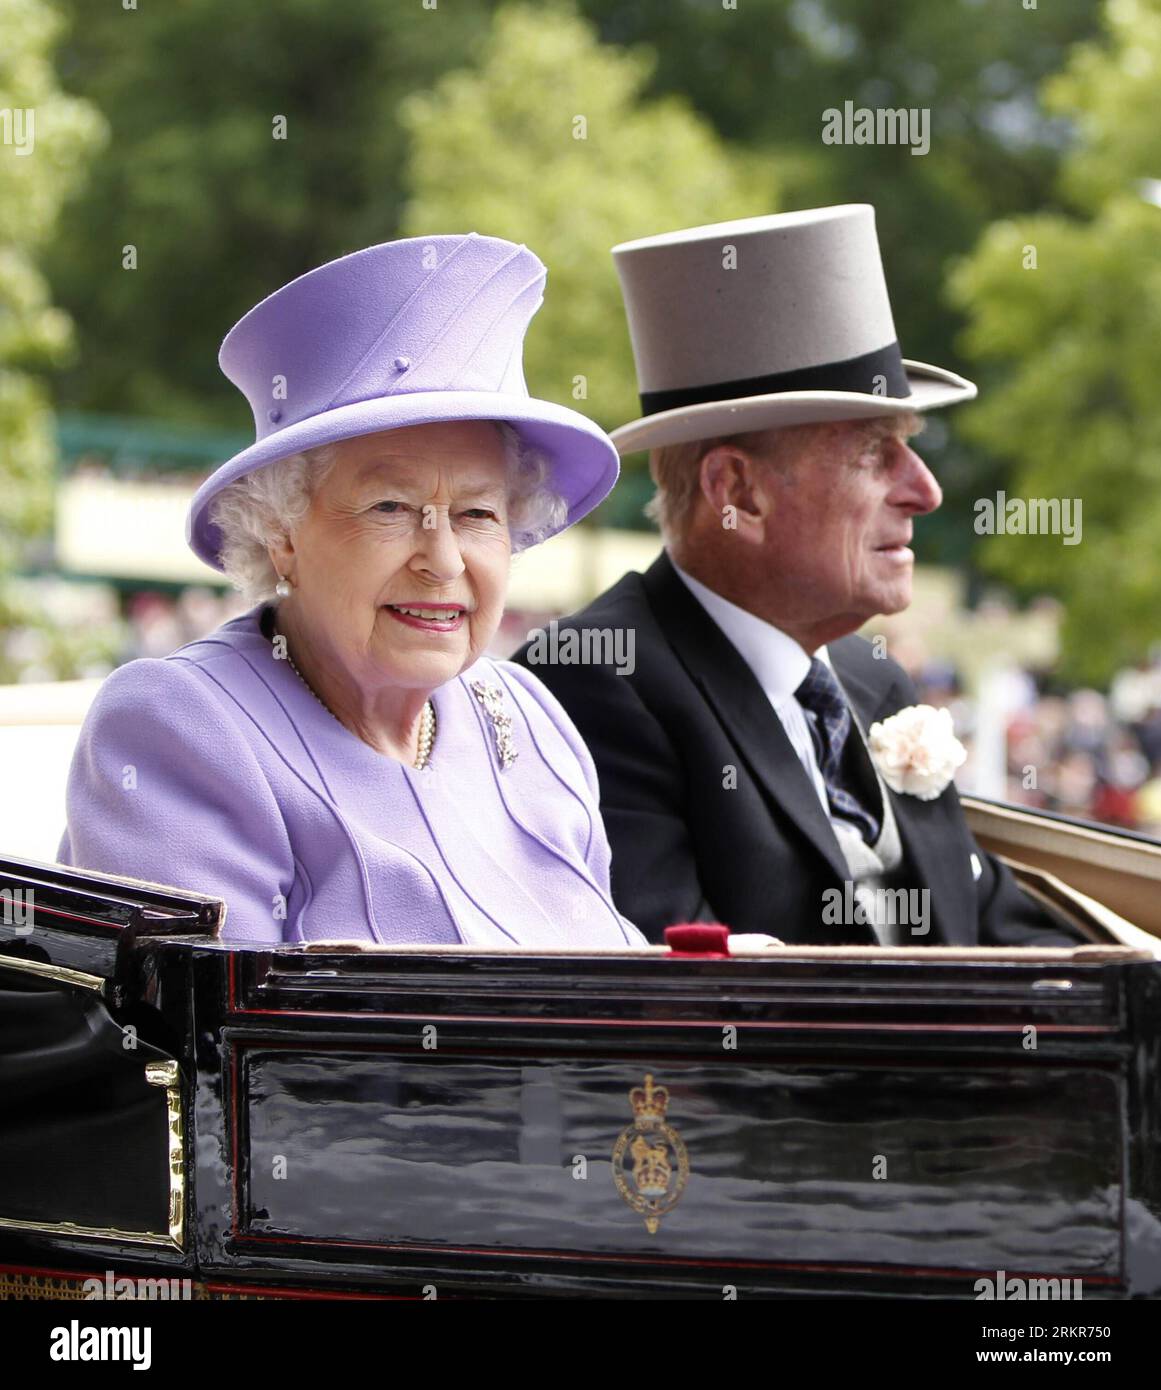 Bildnummer: 58139885  Datum: 22.06.2012  Copyright: imago/Xinhua (120623) -- ASCOT, June 23, 2012(Xinhua) -- Britain s Queen Elizabeth II and Prince Philip, Duke of Edinburgh, attend Royal Ascot at Ascot Racecourse in Ascot, Berkshire of Britain on June 22, 2012. (Xinhua/Wang Lili) BRITAIN-ASCOT-ROYAL ASCOT-RACECOURSE PUBLICATIONxNOTxINxCHN Pferdesport Reiten Pferderennen Galopp People Politik Entertainment Adel UK England premiumd xmk x0x 2012 quadrat Aufmacher      58139885 Date 22 06 2012 Copyright Imago XINHUA  Ascot June 23 2012 XINHUA Britain S Queen Elizabeth II and Prince Philip Duke o Stock Photo